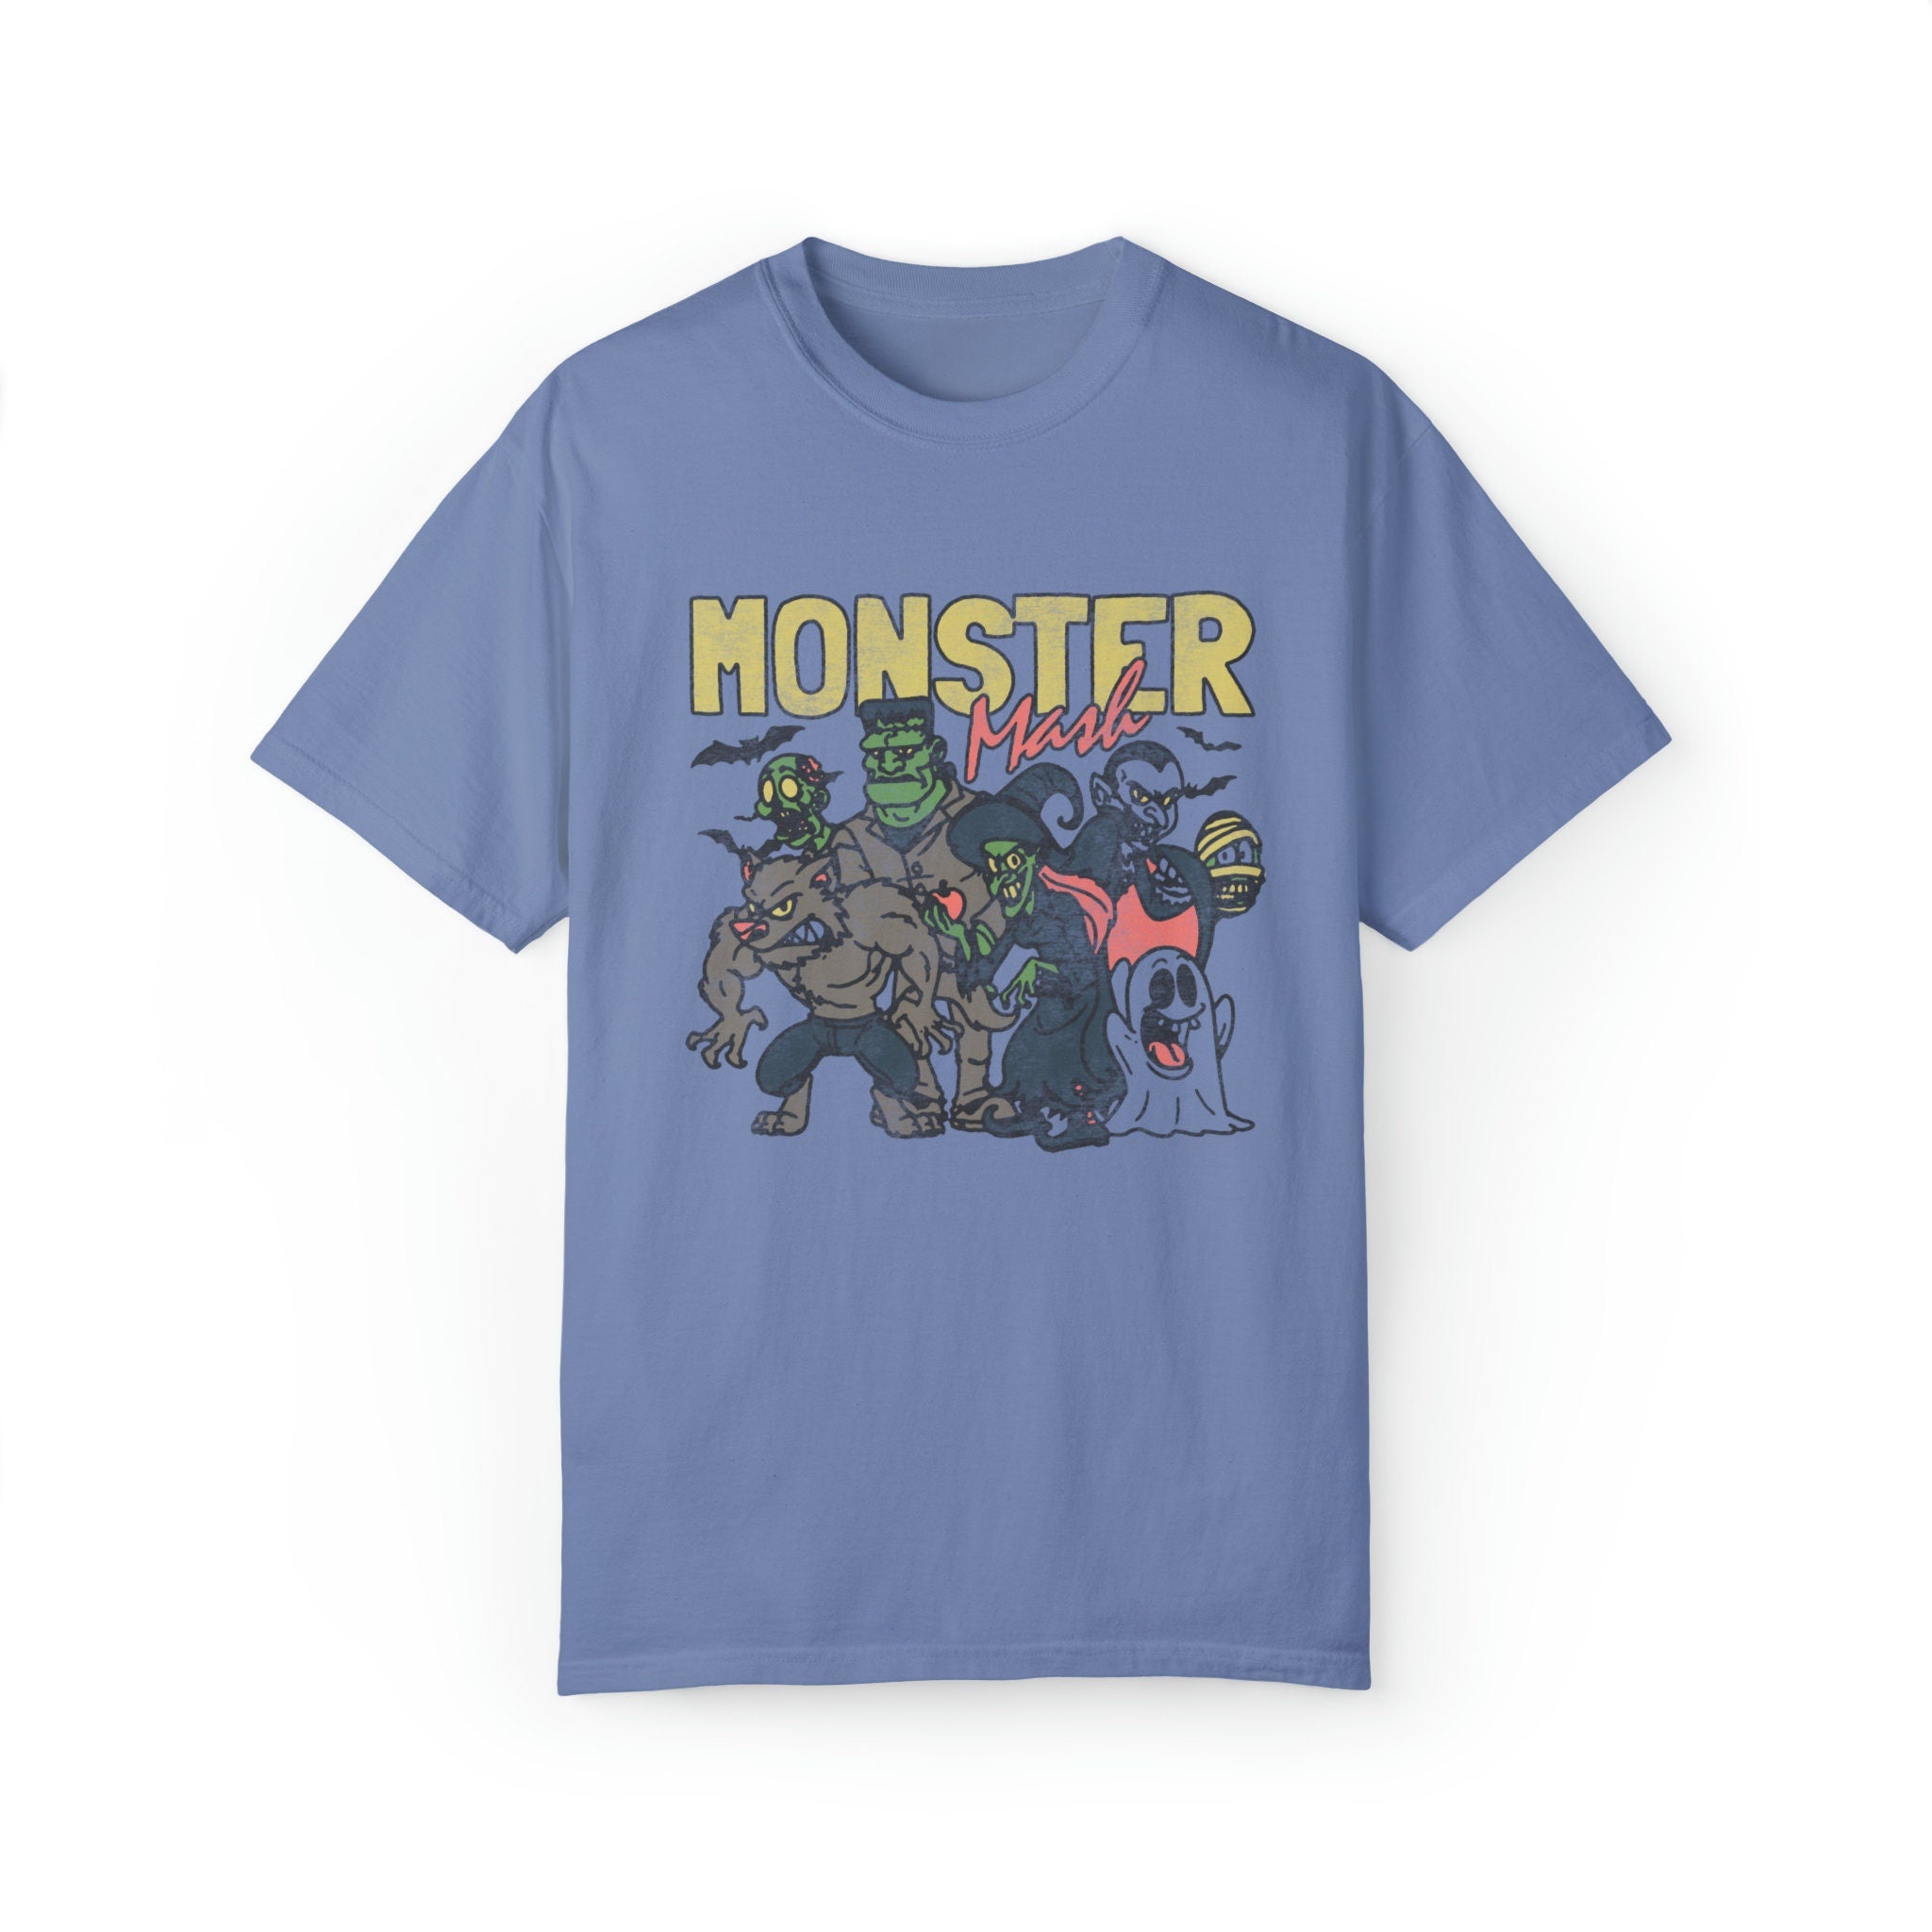 Retro Halloween Monster Mash shirt, Vintage Ghost Halloween t-Shirt, Monster Tee Shirt, Retro Fall Top, Fall Retro Halloween Shirt